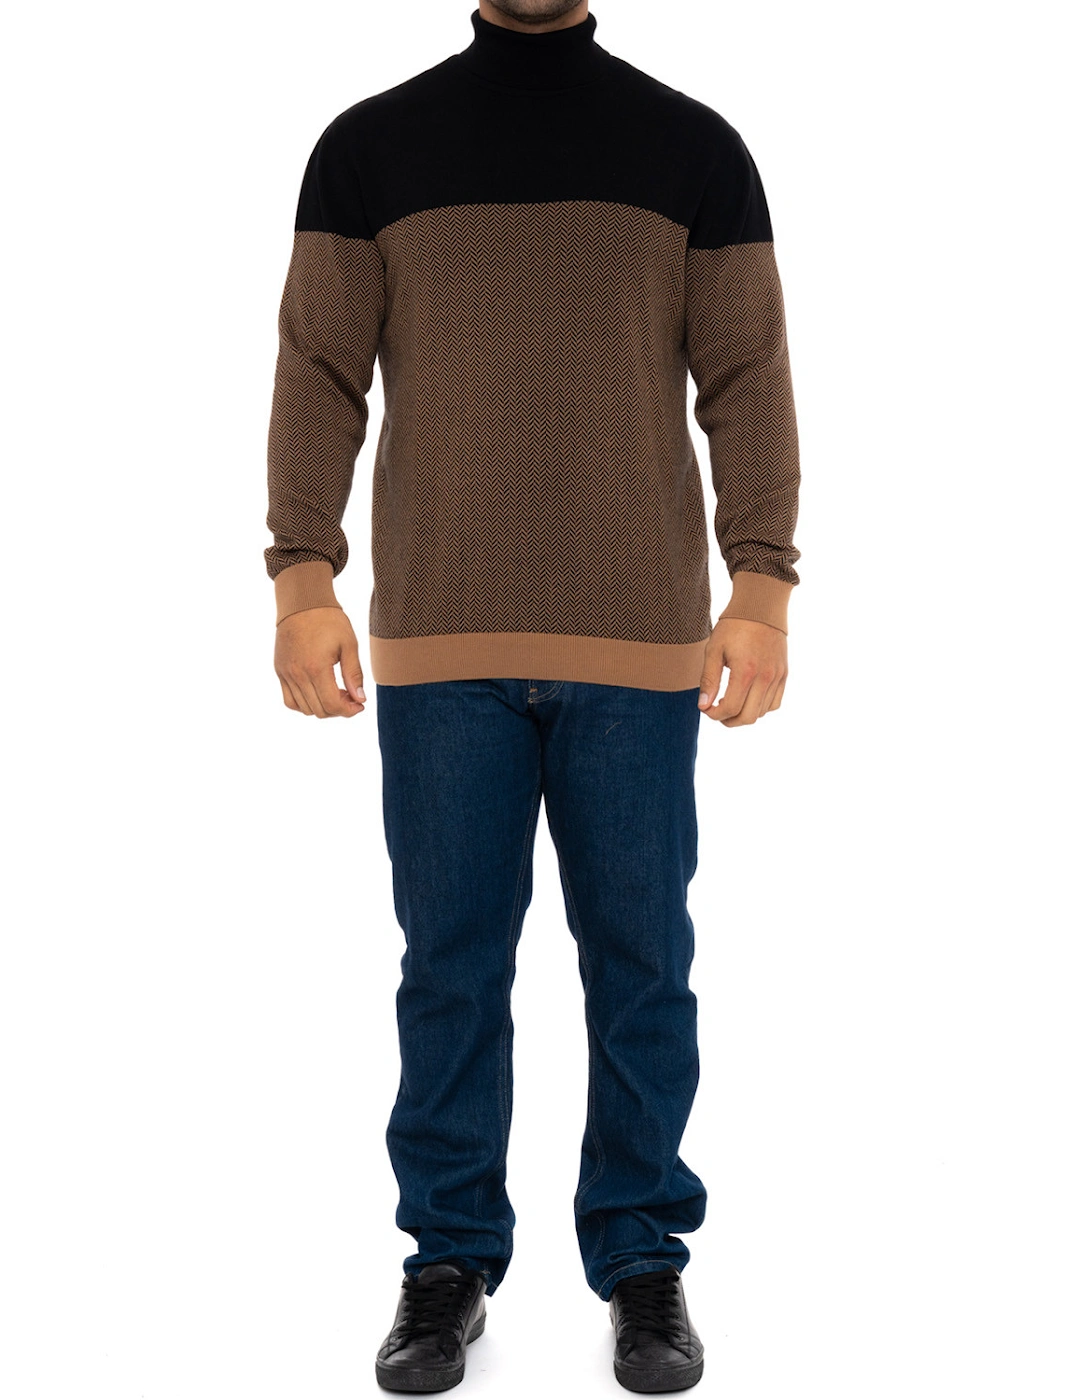 Mens Weave Panel Roll Neck Knit Sweatshirt (Black/Brown)